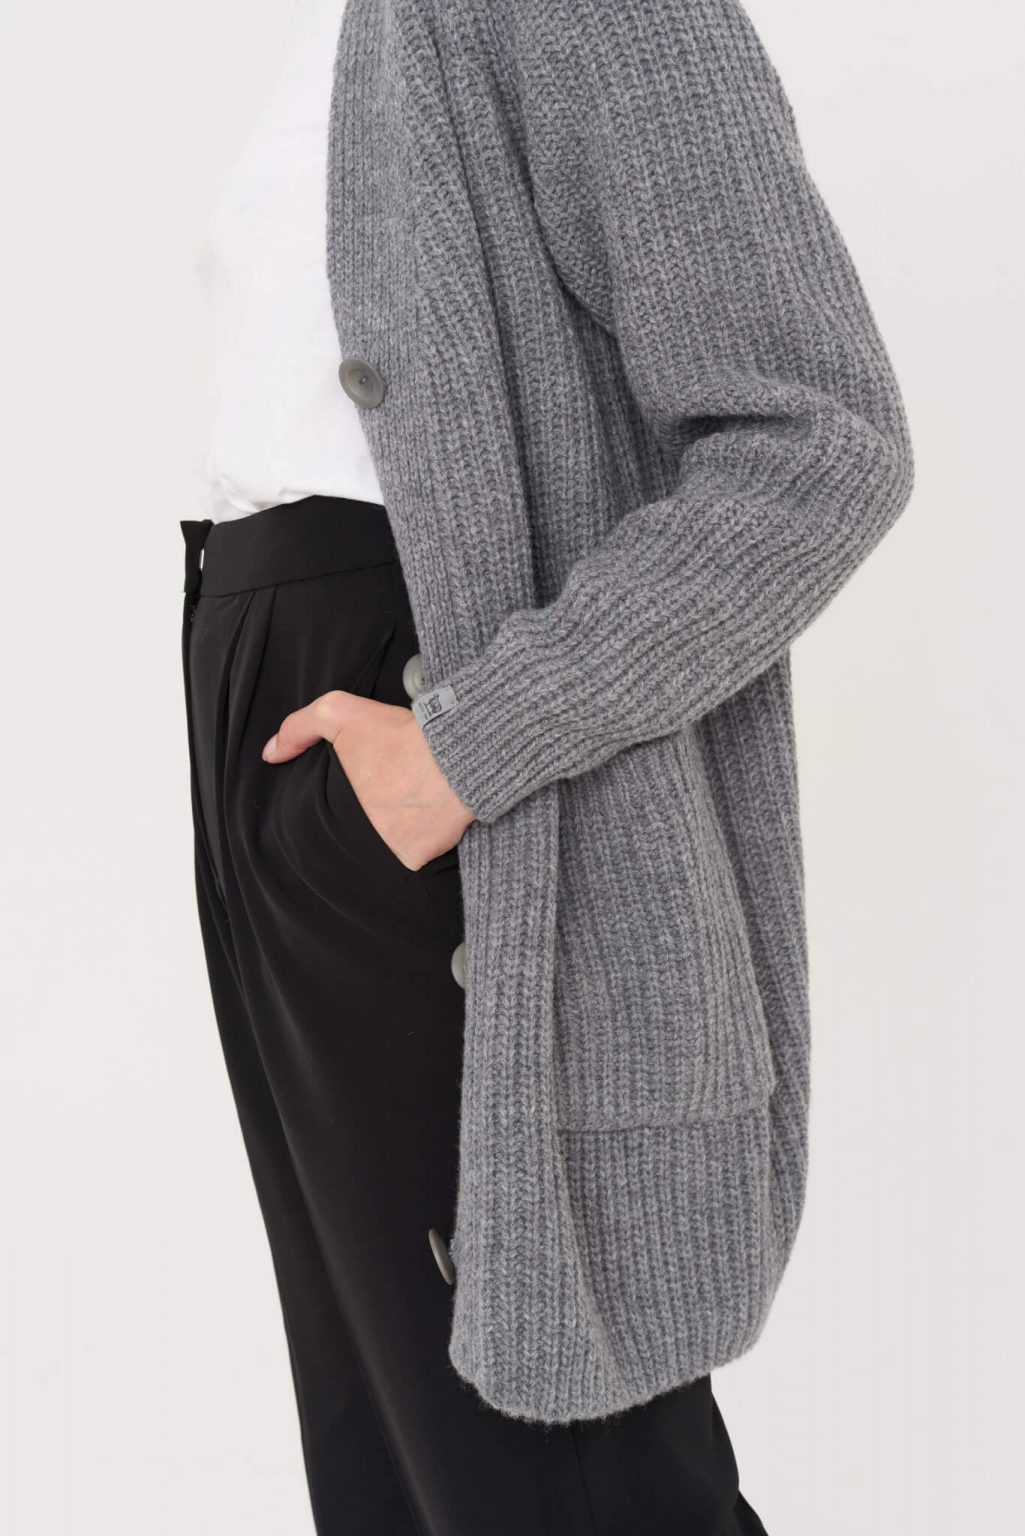 knitted woolen cardigan in grey